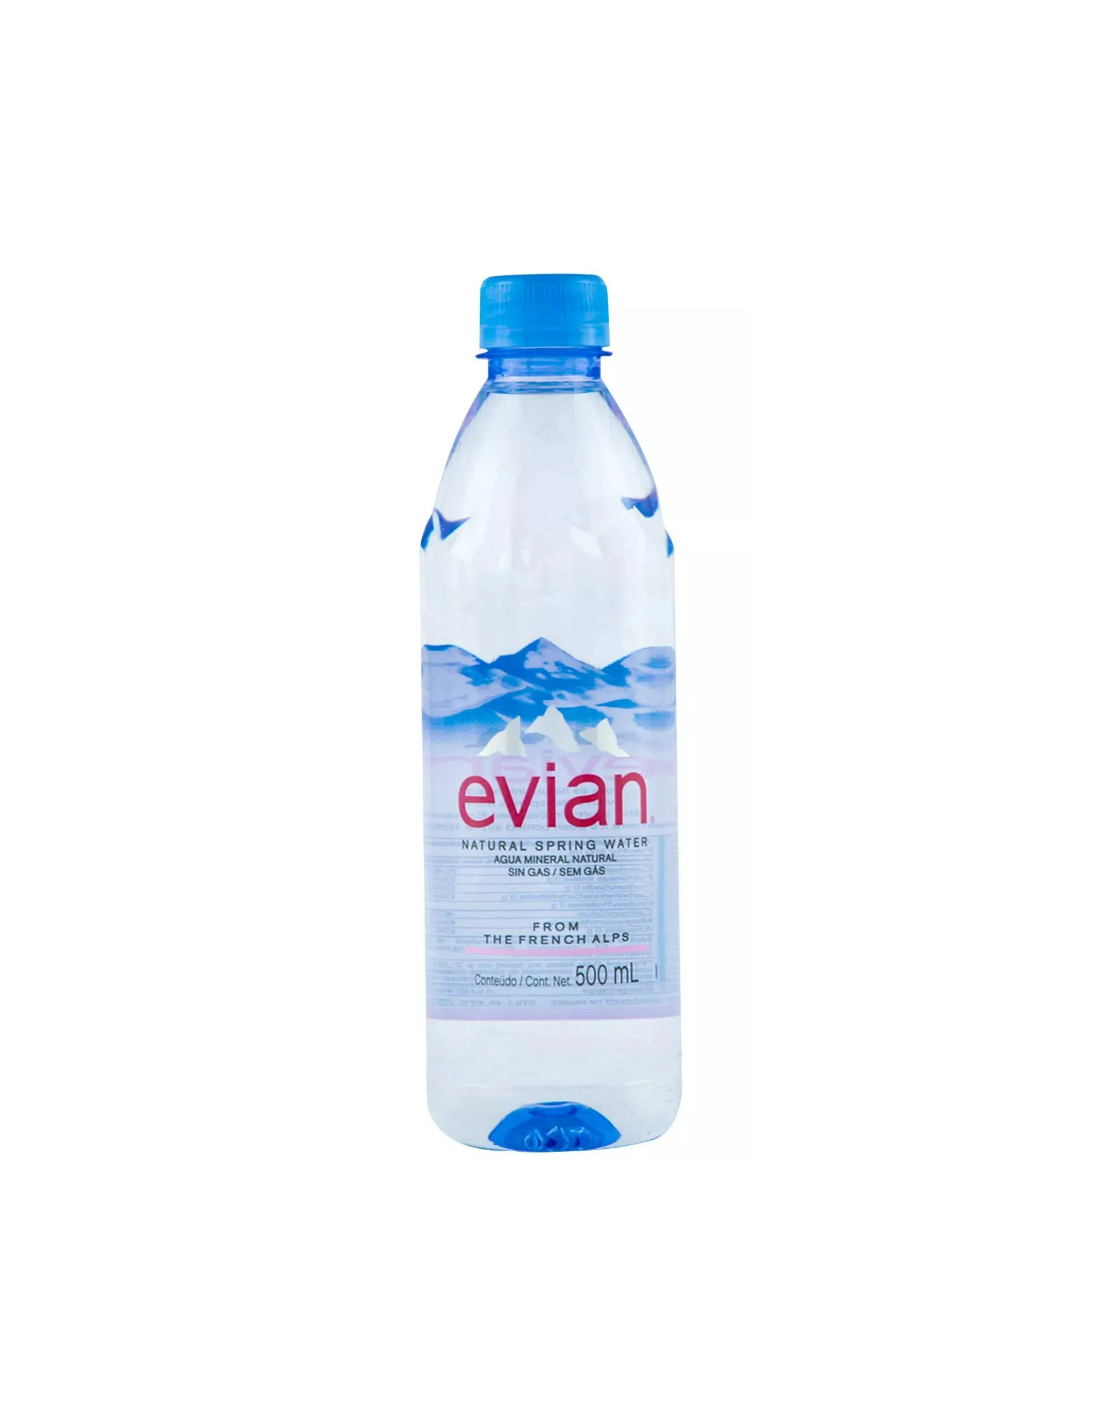 Agua Mineral Evian Sin Gas botella vidrio 750ml - PERUFARMA SA